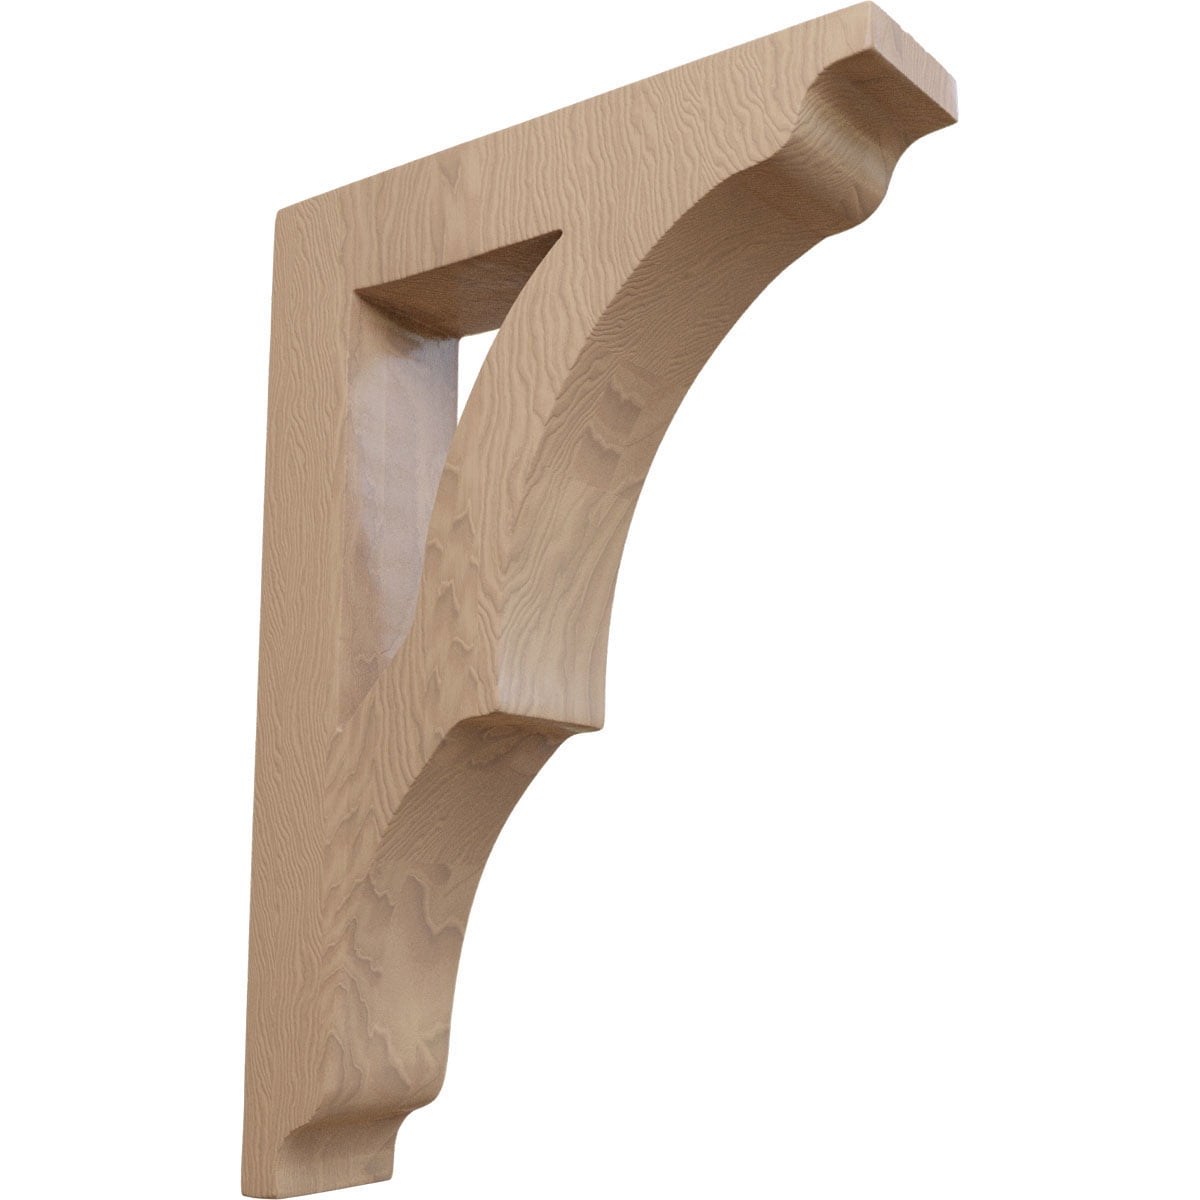 1 pair Wooden Corbels Shelf Brackets solid pine style C 